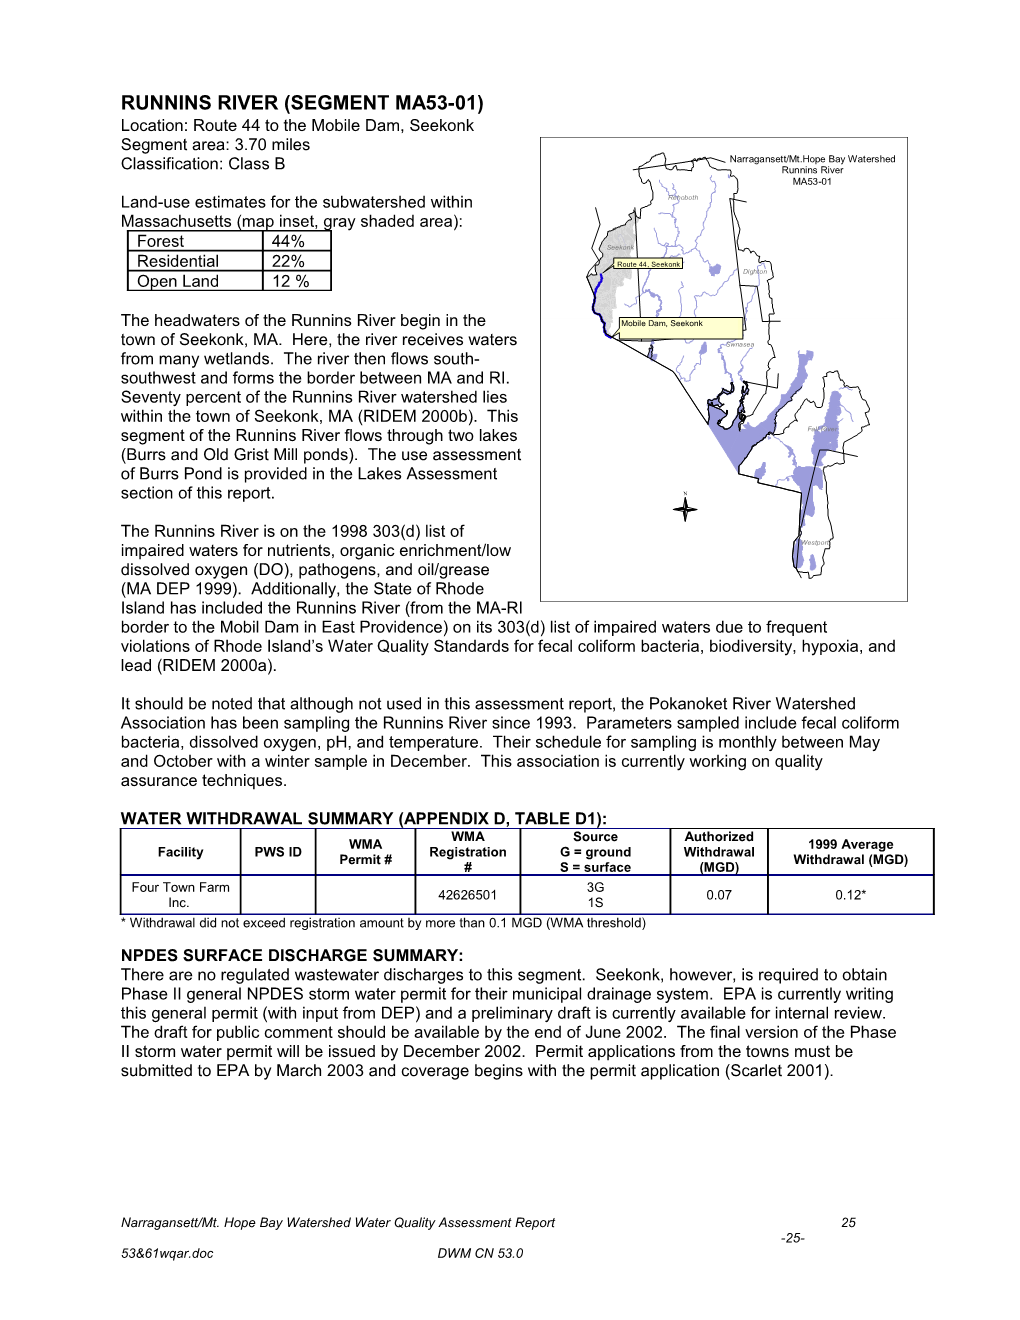 Narragansett Bay Watershed River Segment Assessments